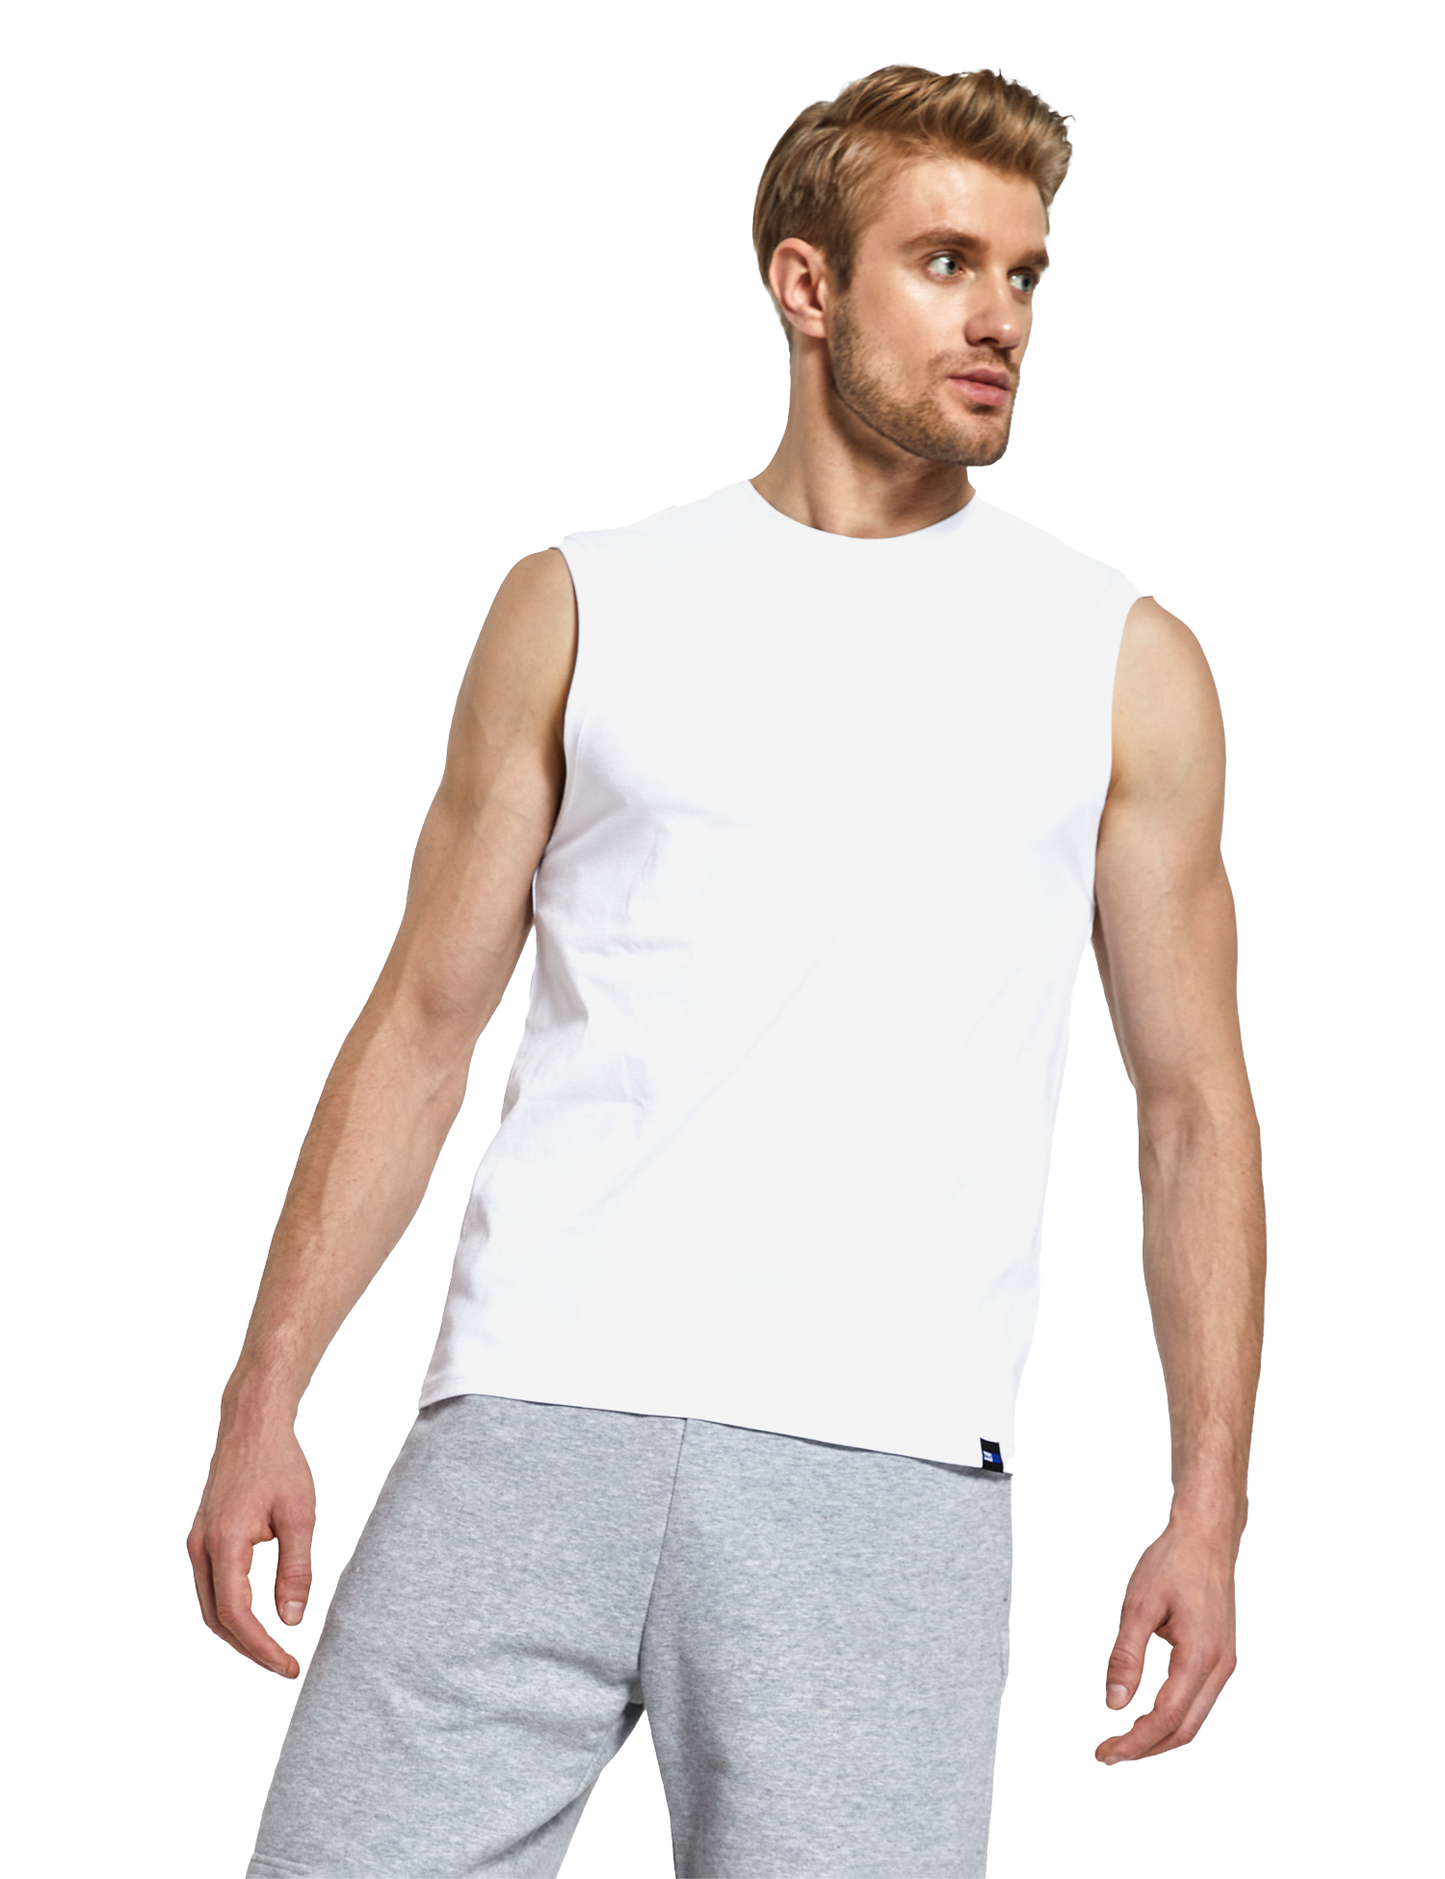 mens sleeveless shirts white